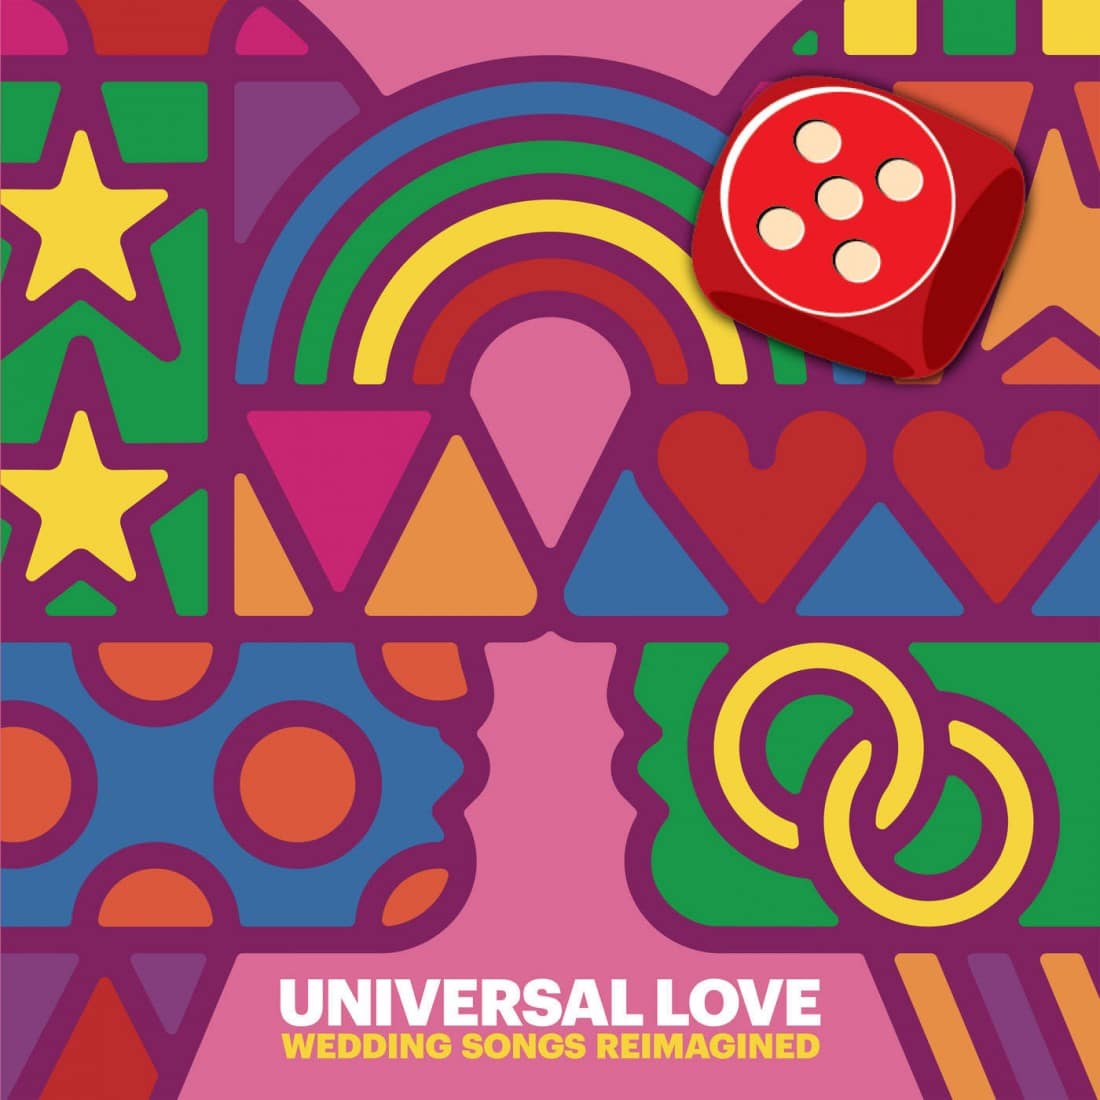 paaoeret11 Universal Love